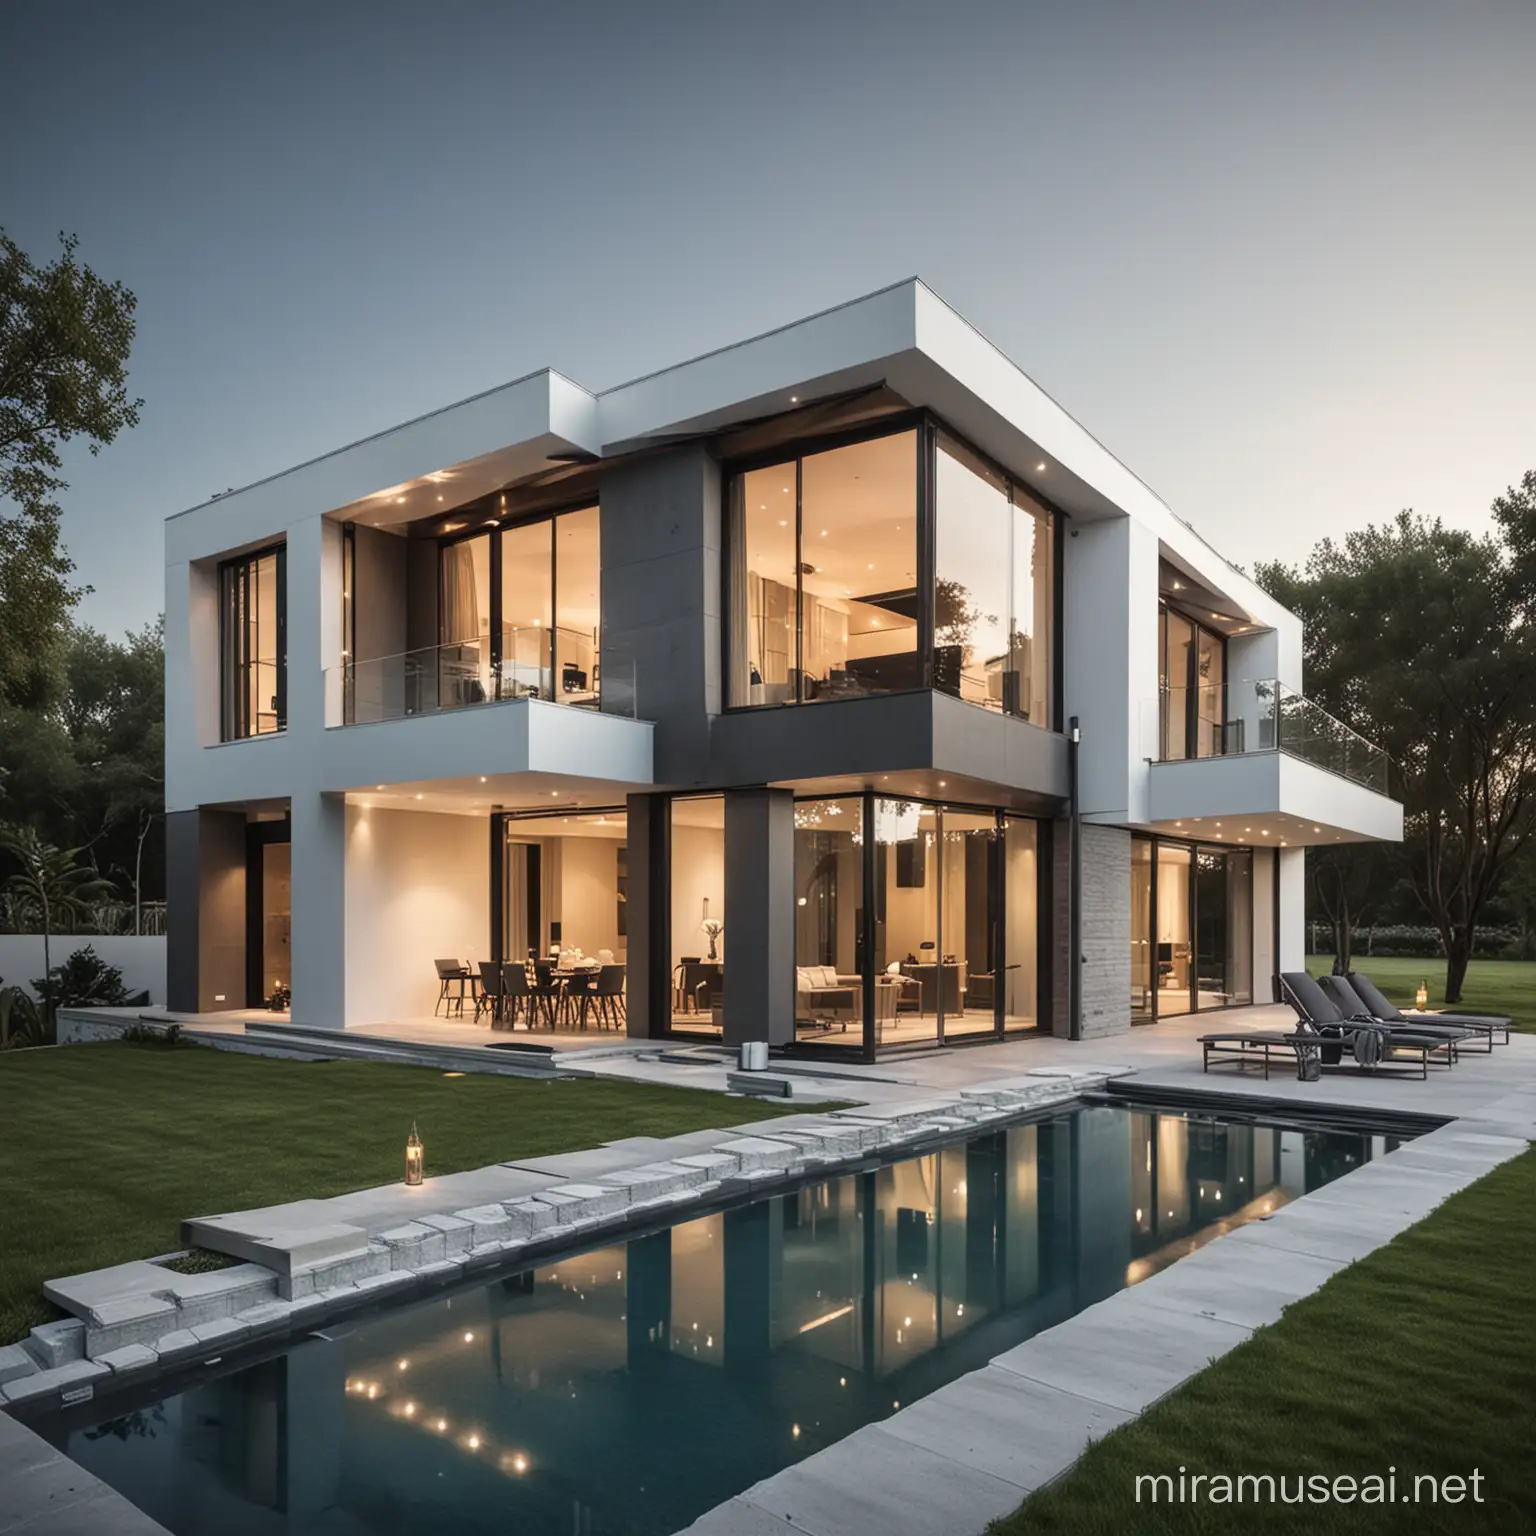 Contemporary Urban Home with Minimalist Design